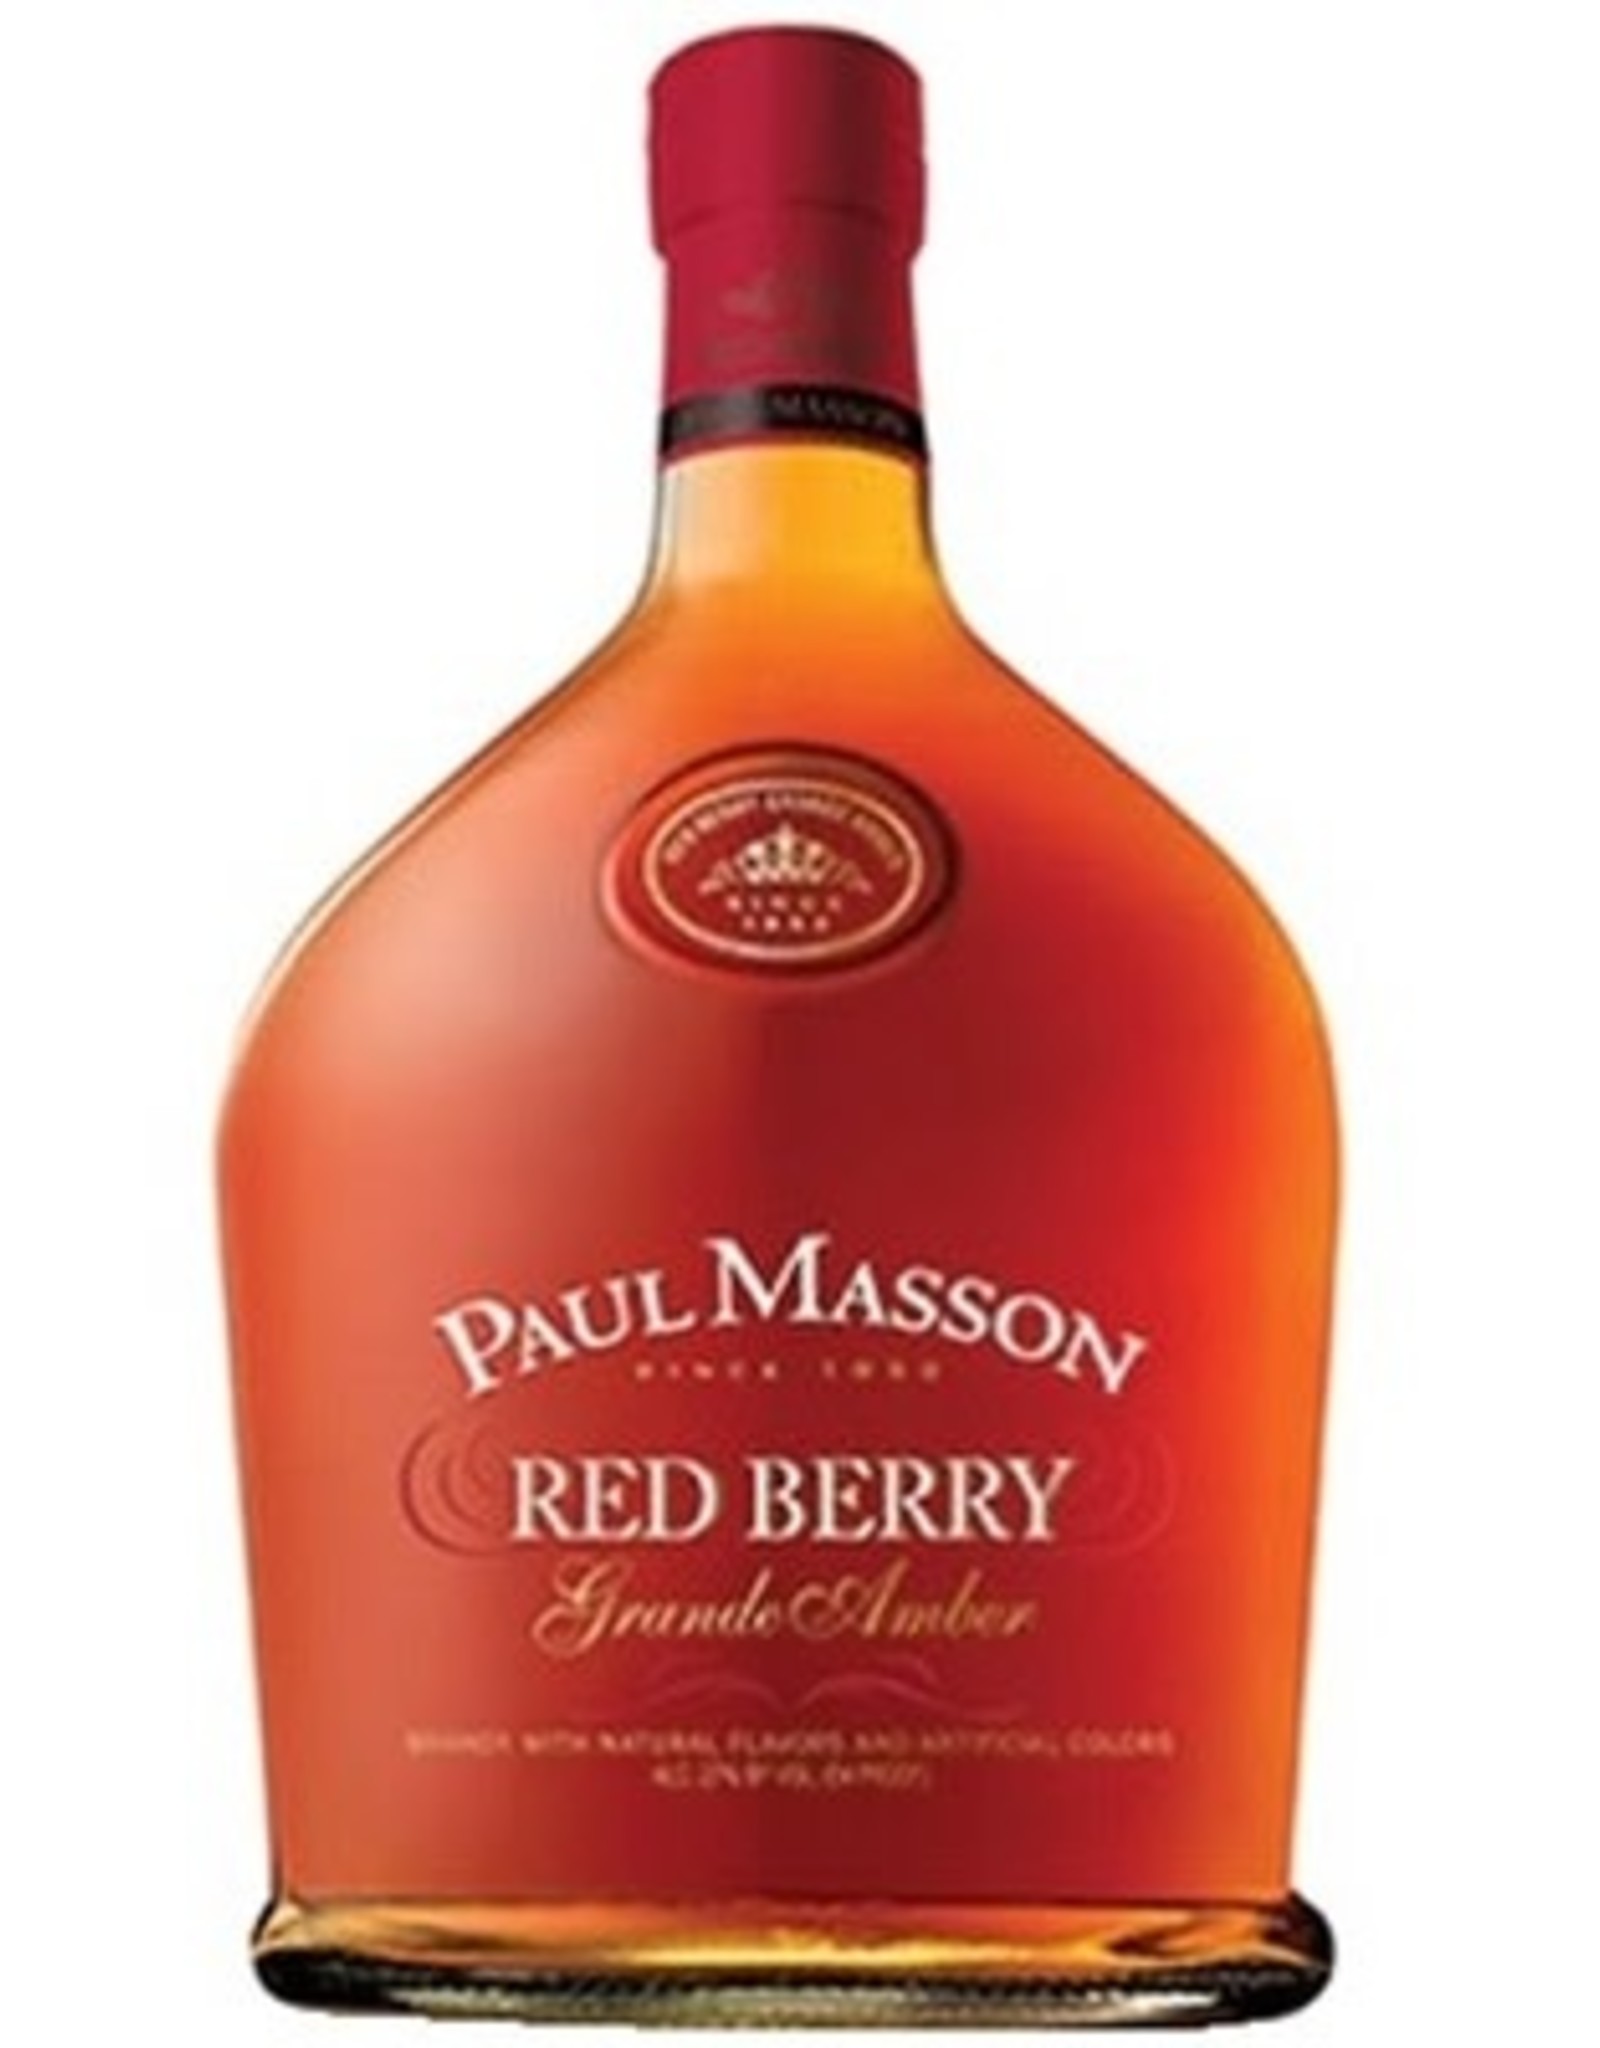 Paul Masson Paul Masson Red Berry